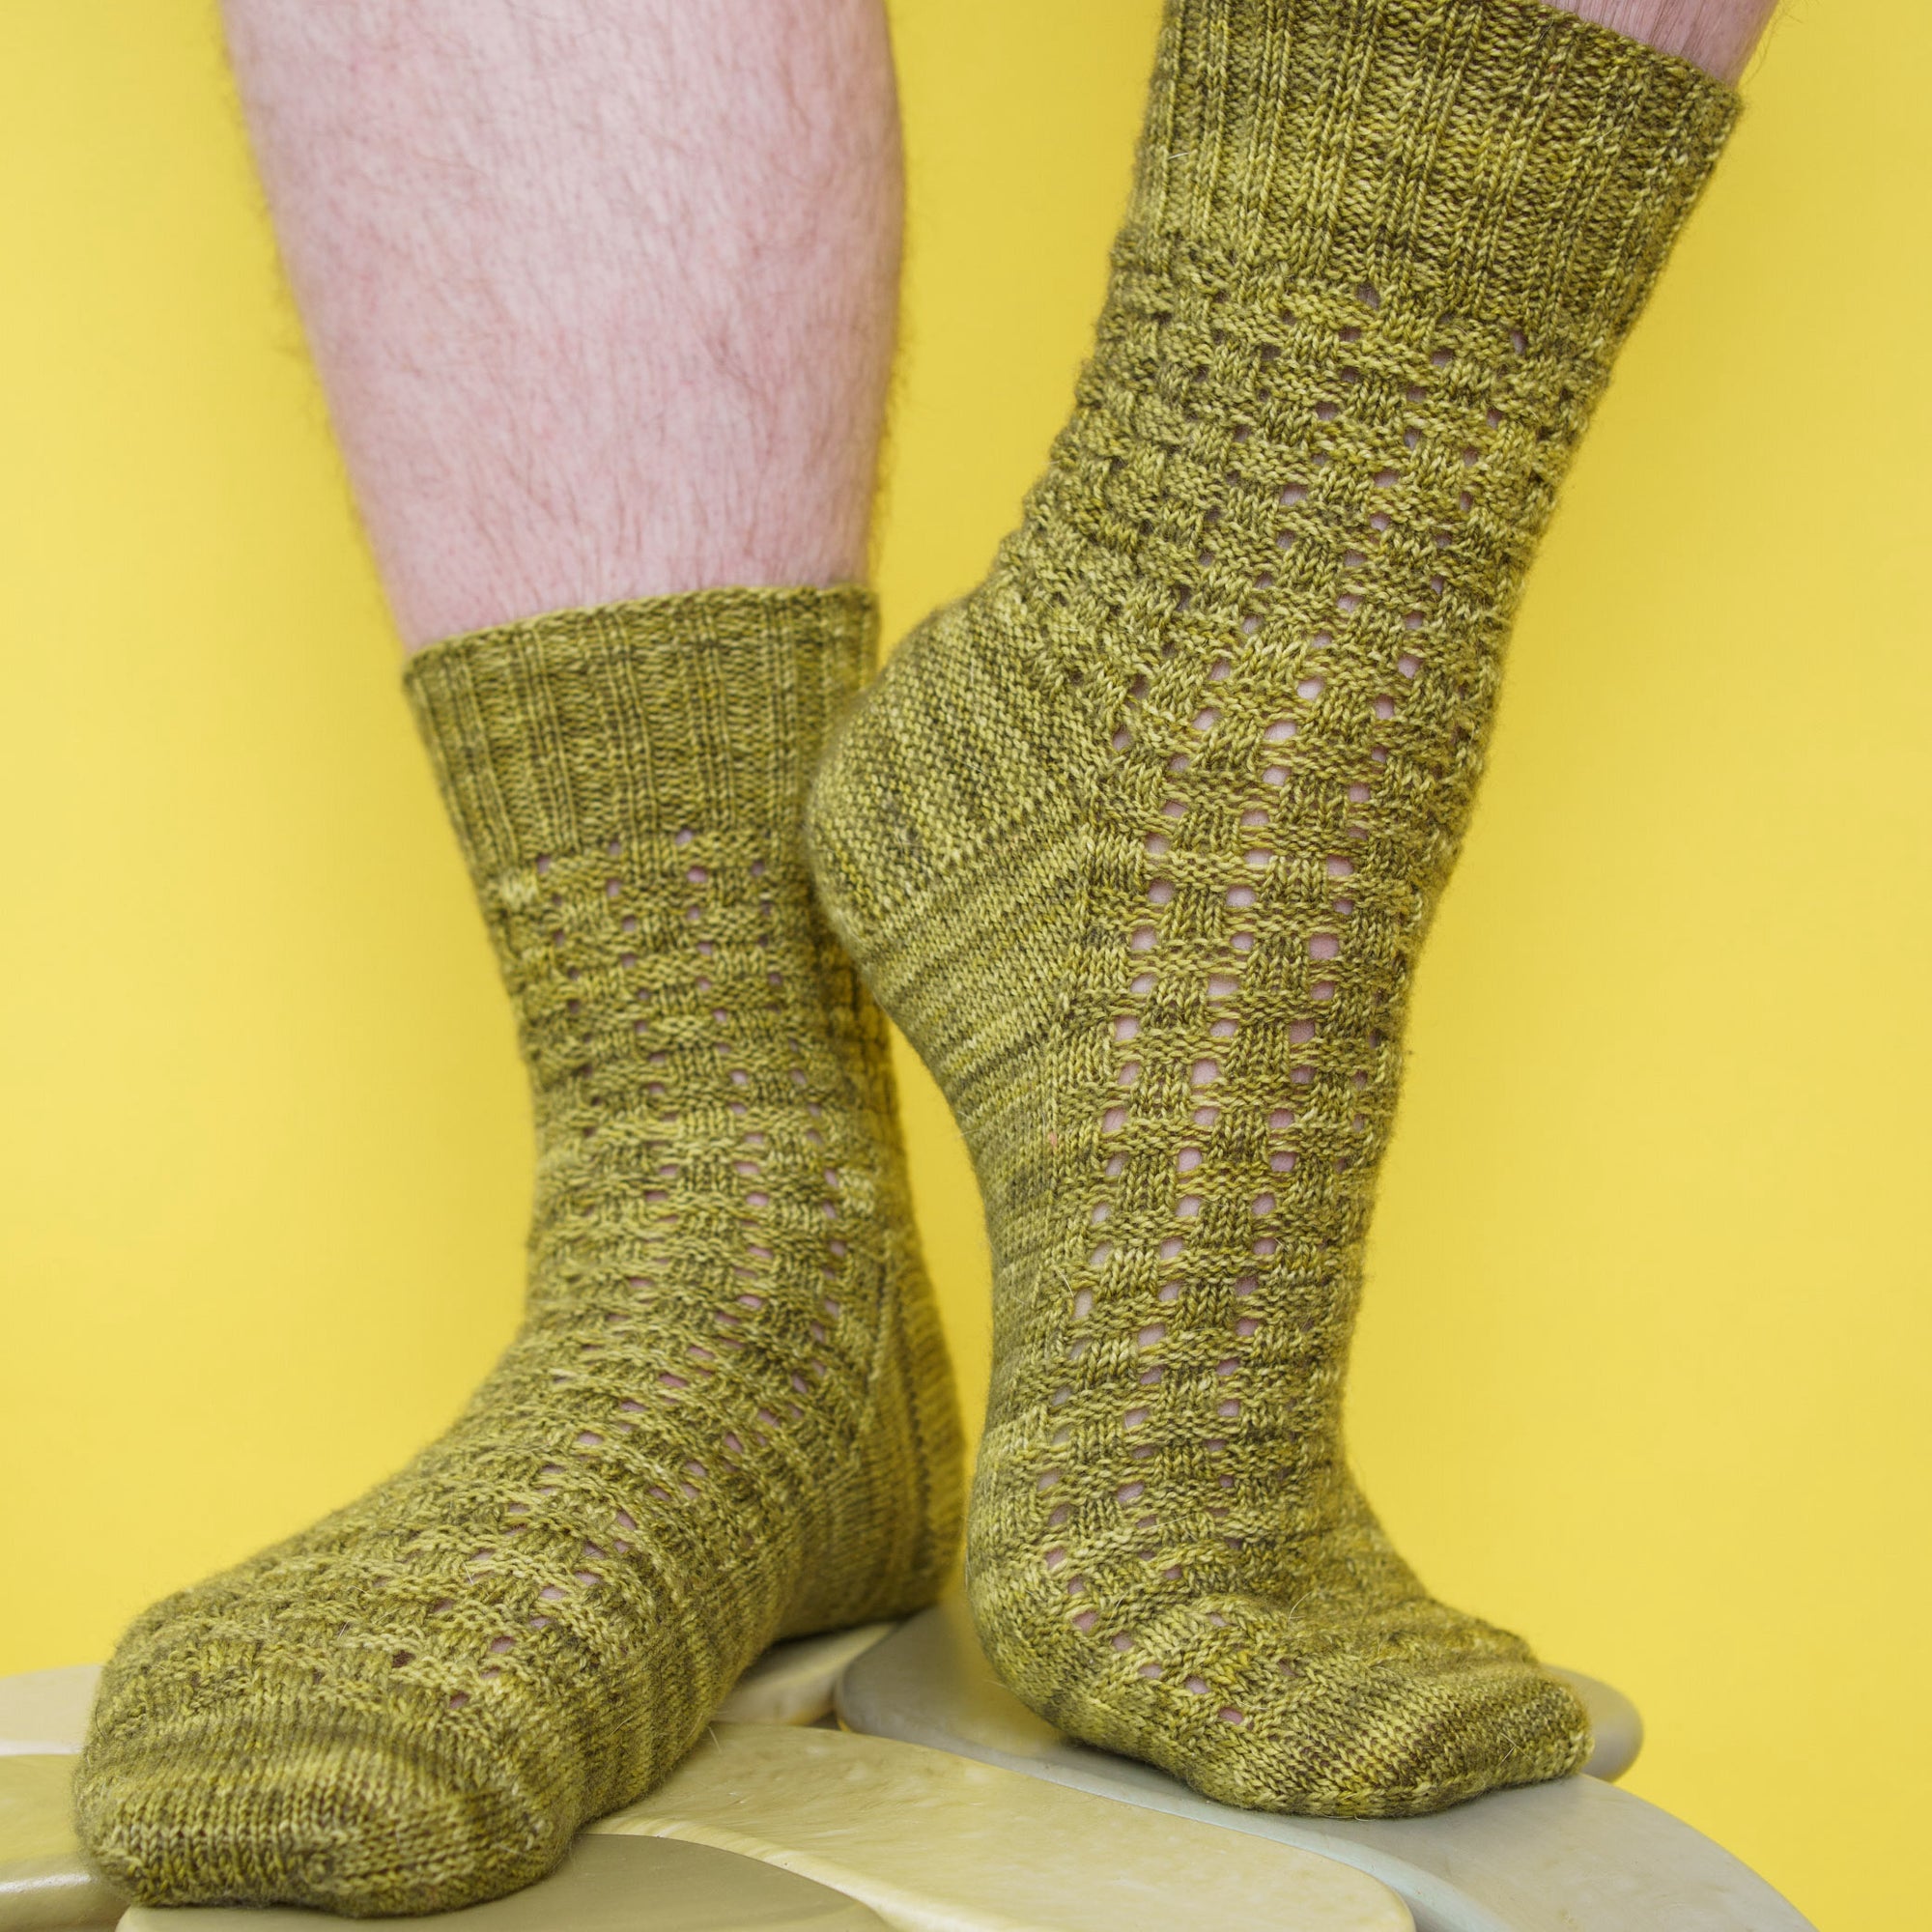 The Basketweaver Socks